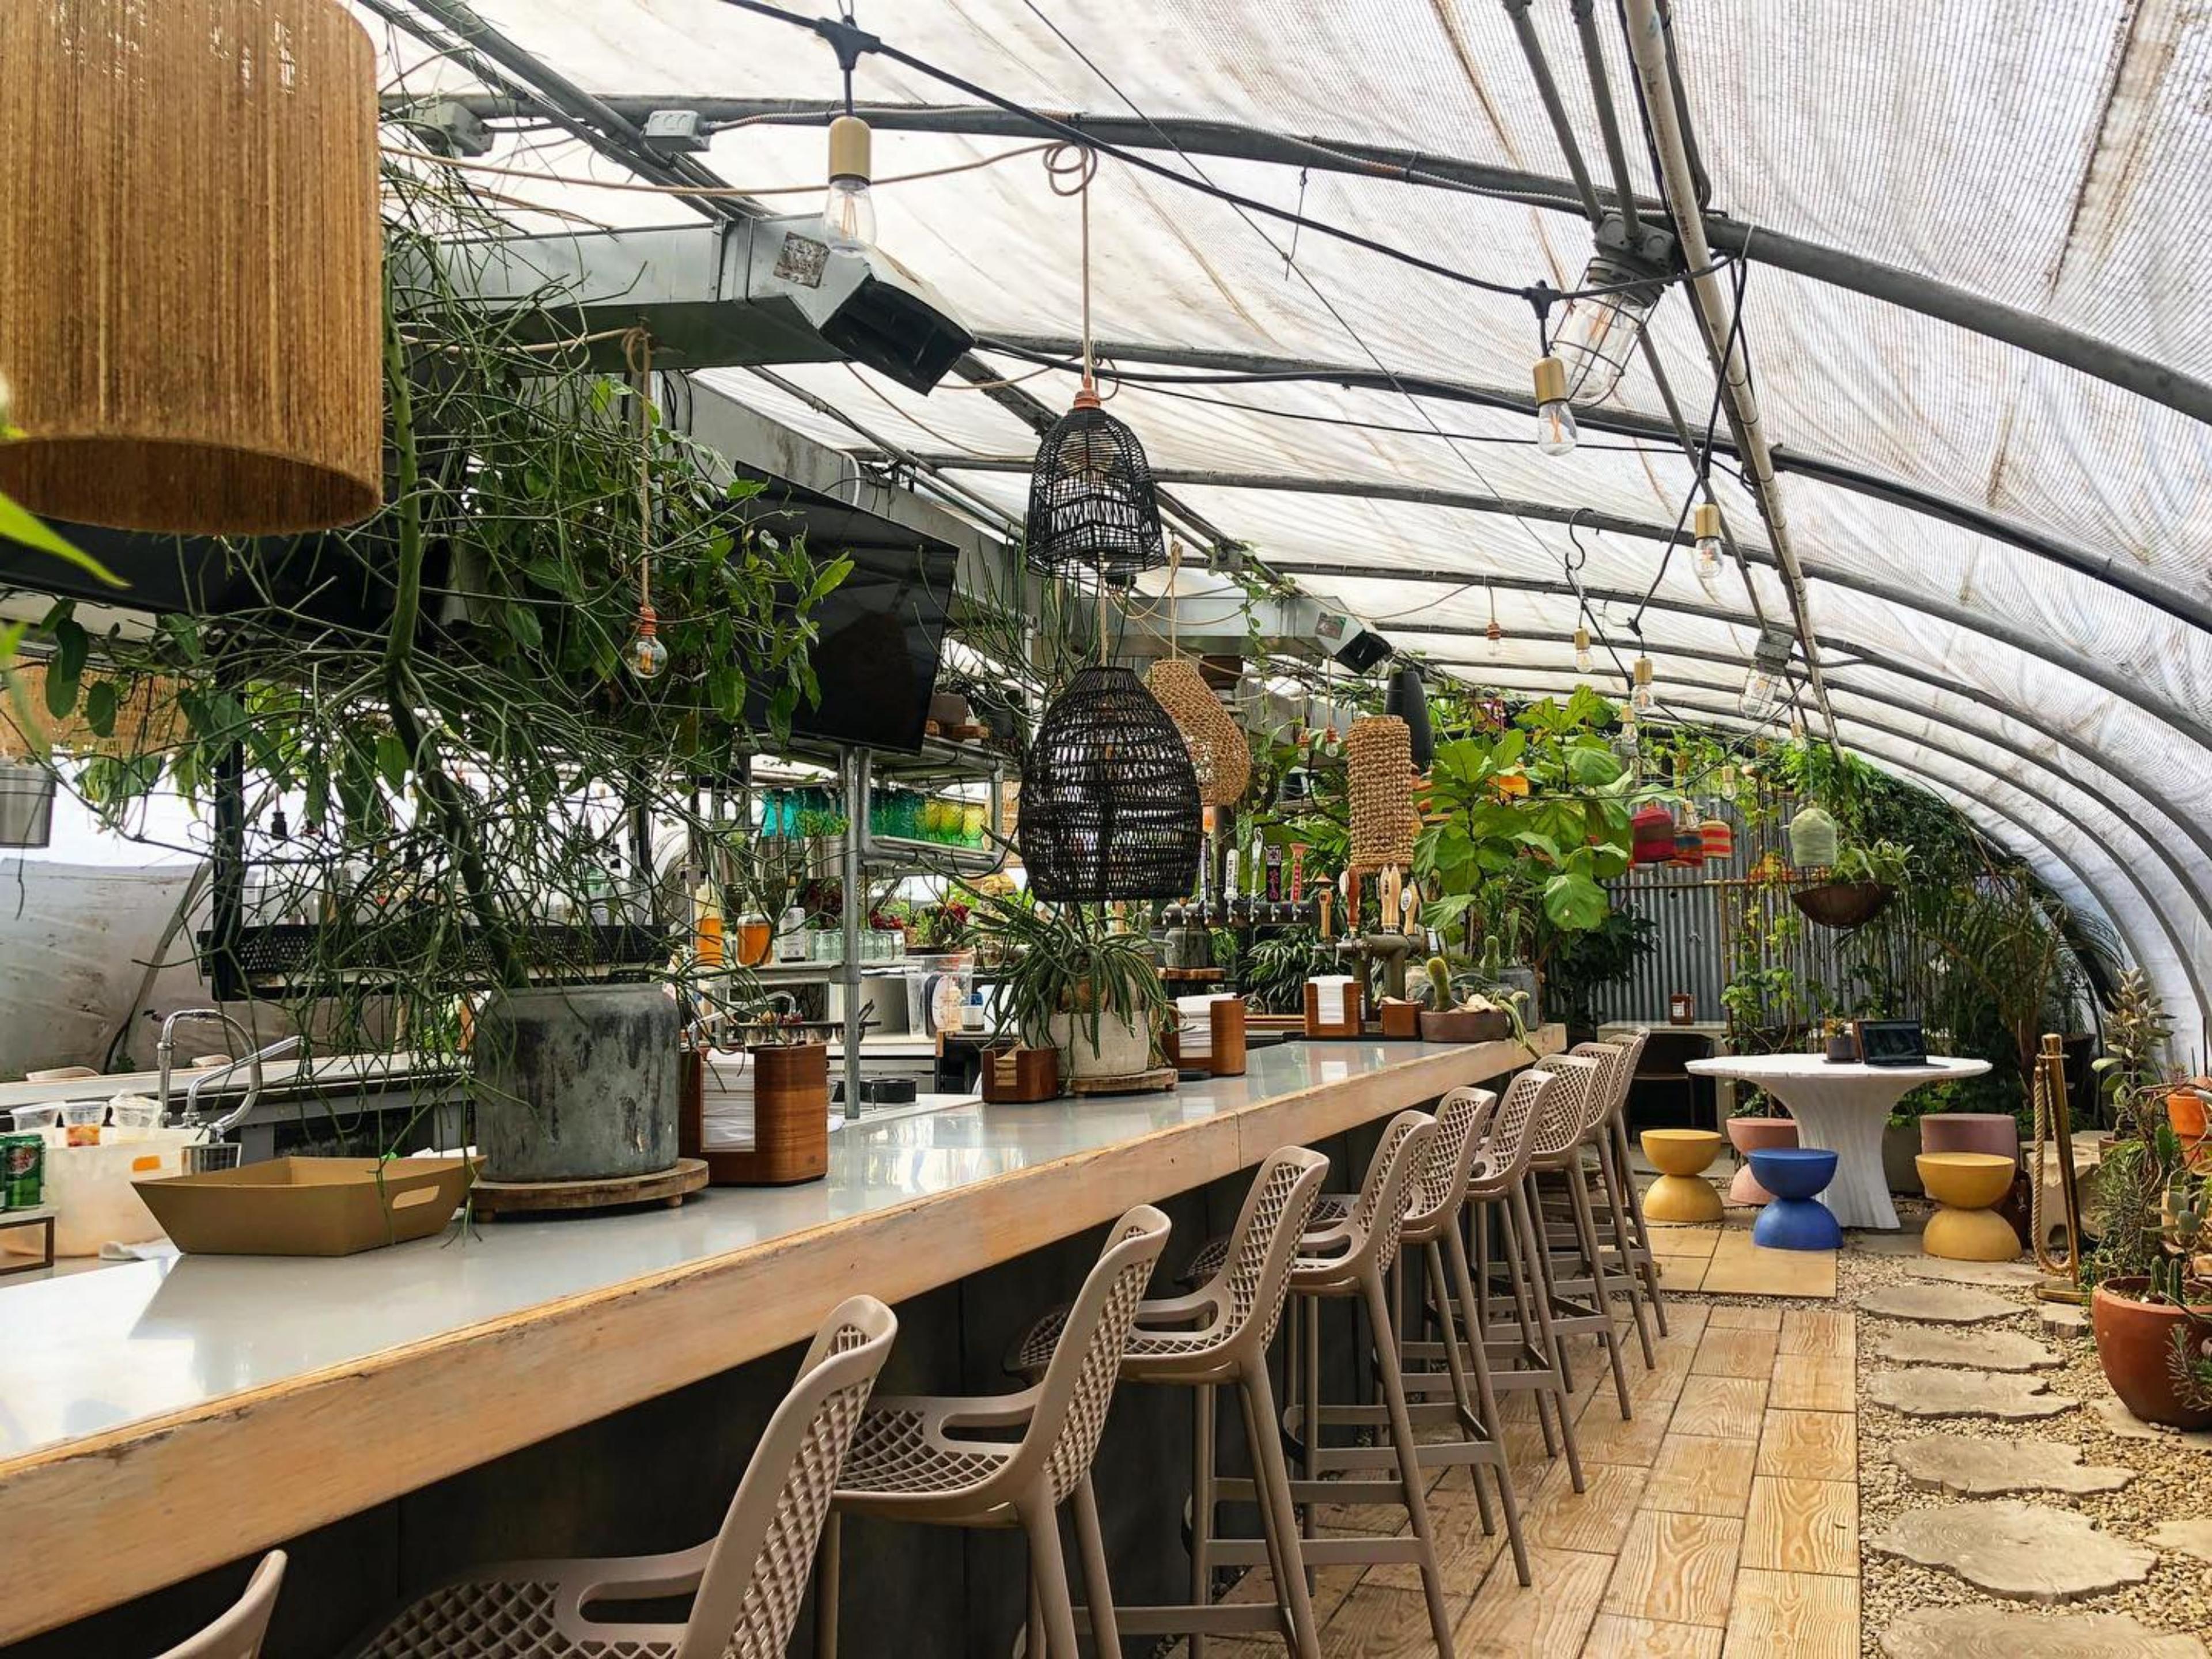 Greenhouse Bar